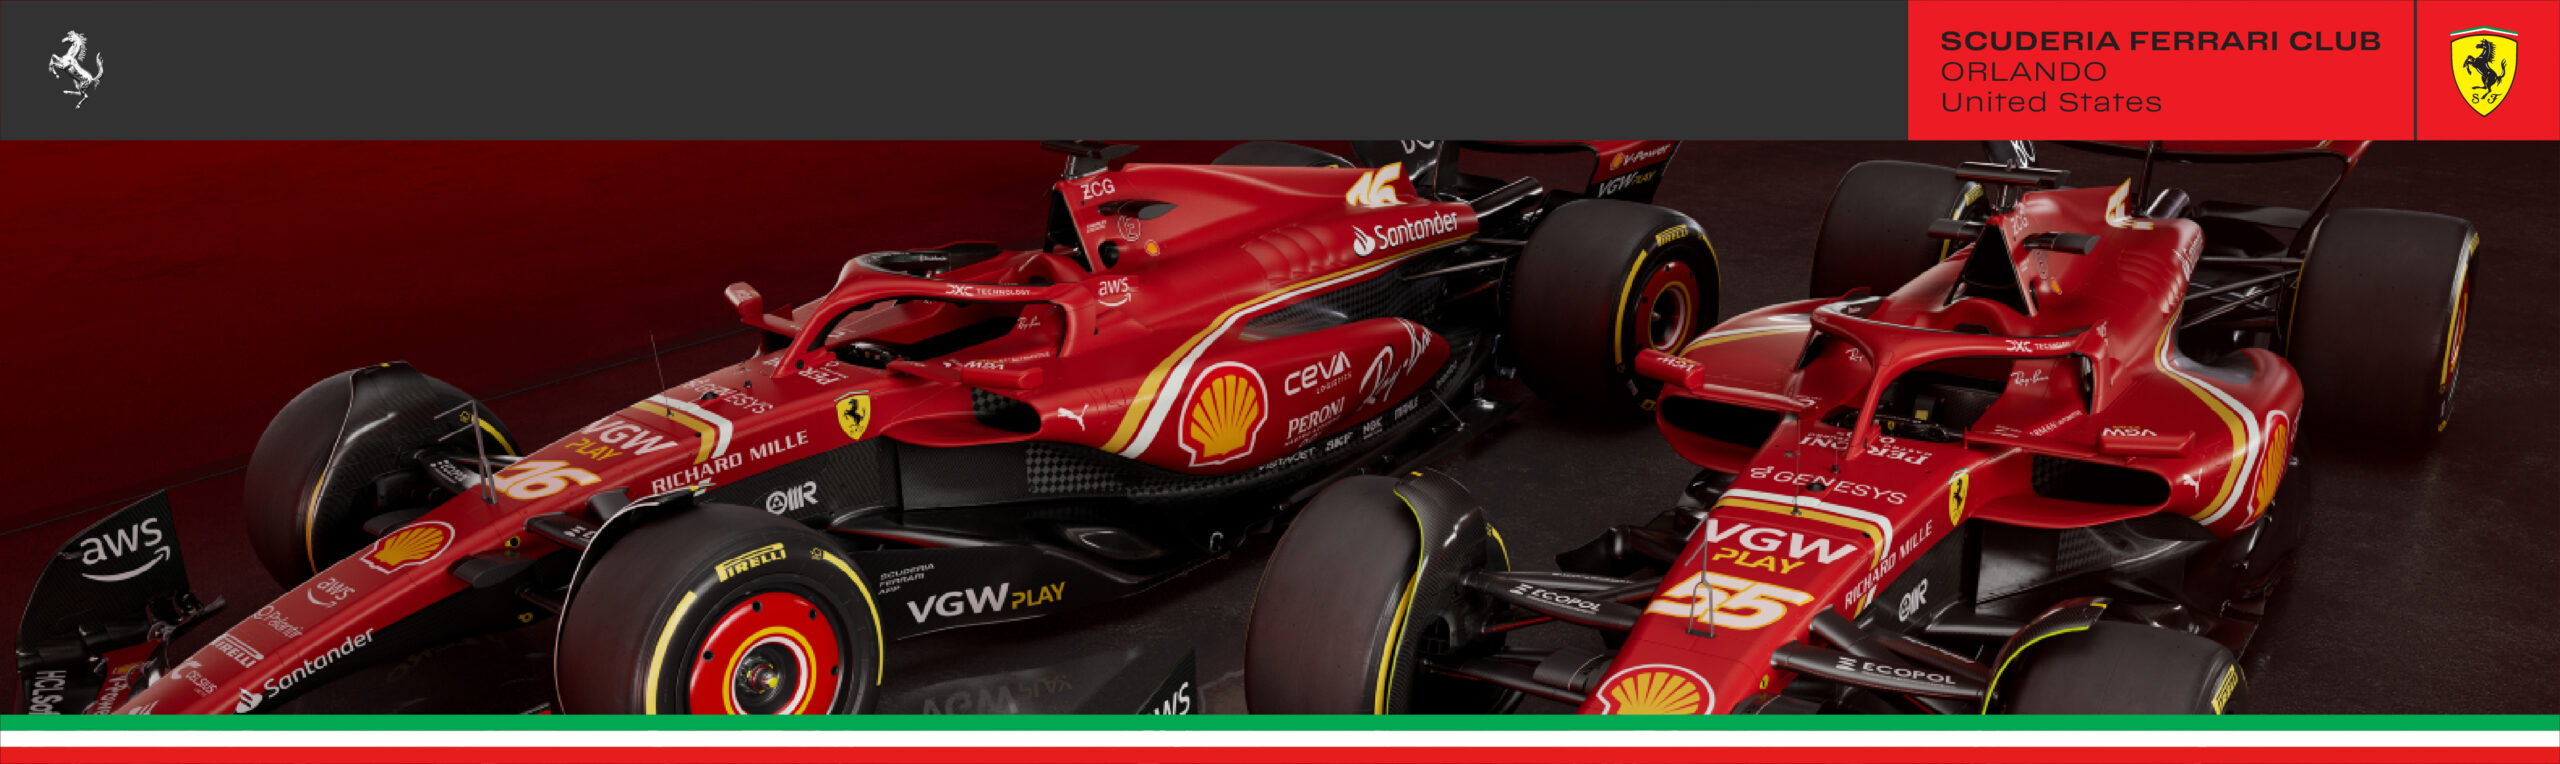 Scuderia Ferrari Club Orlando